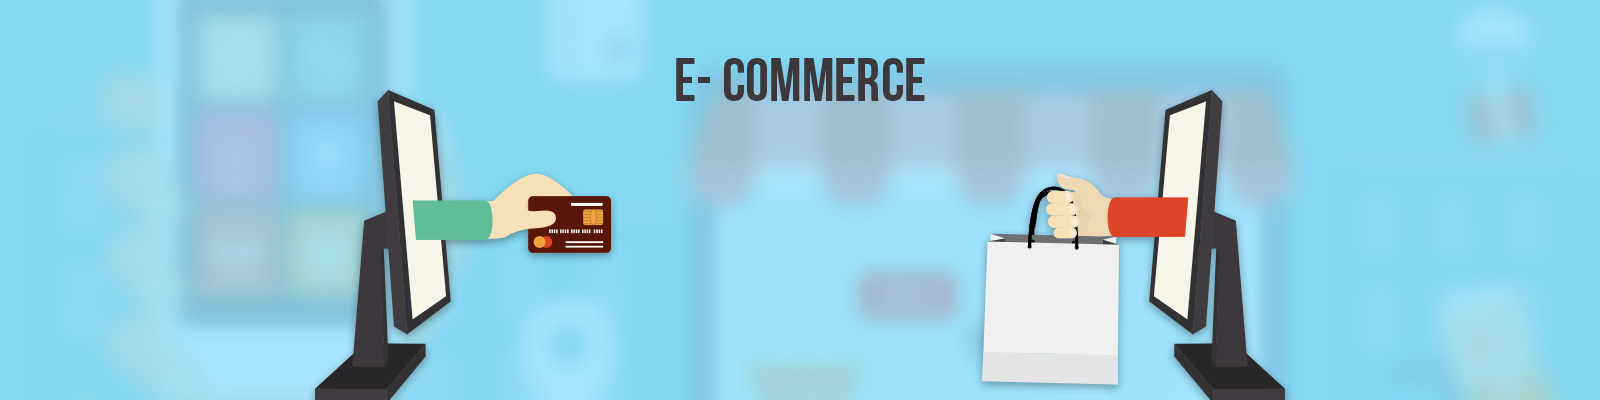 ecommerce app development